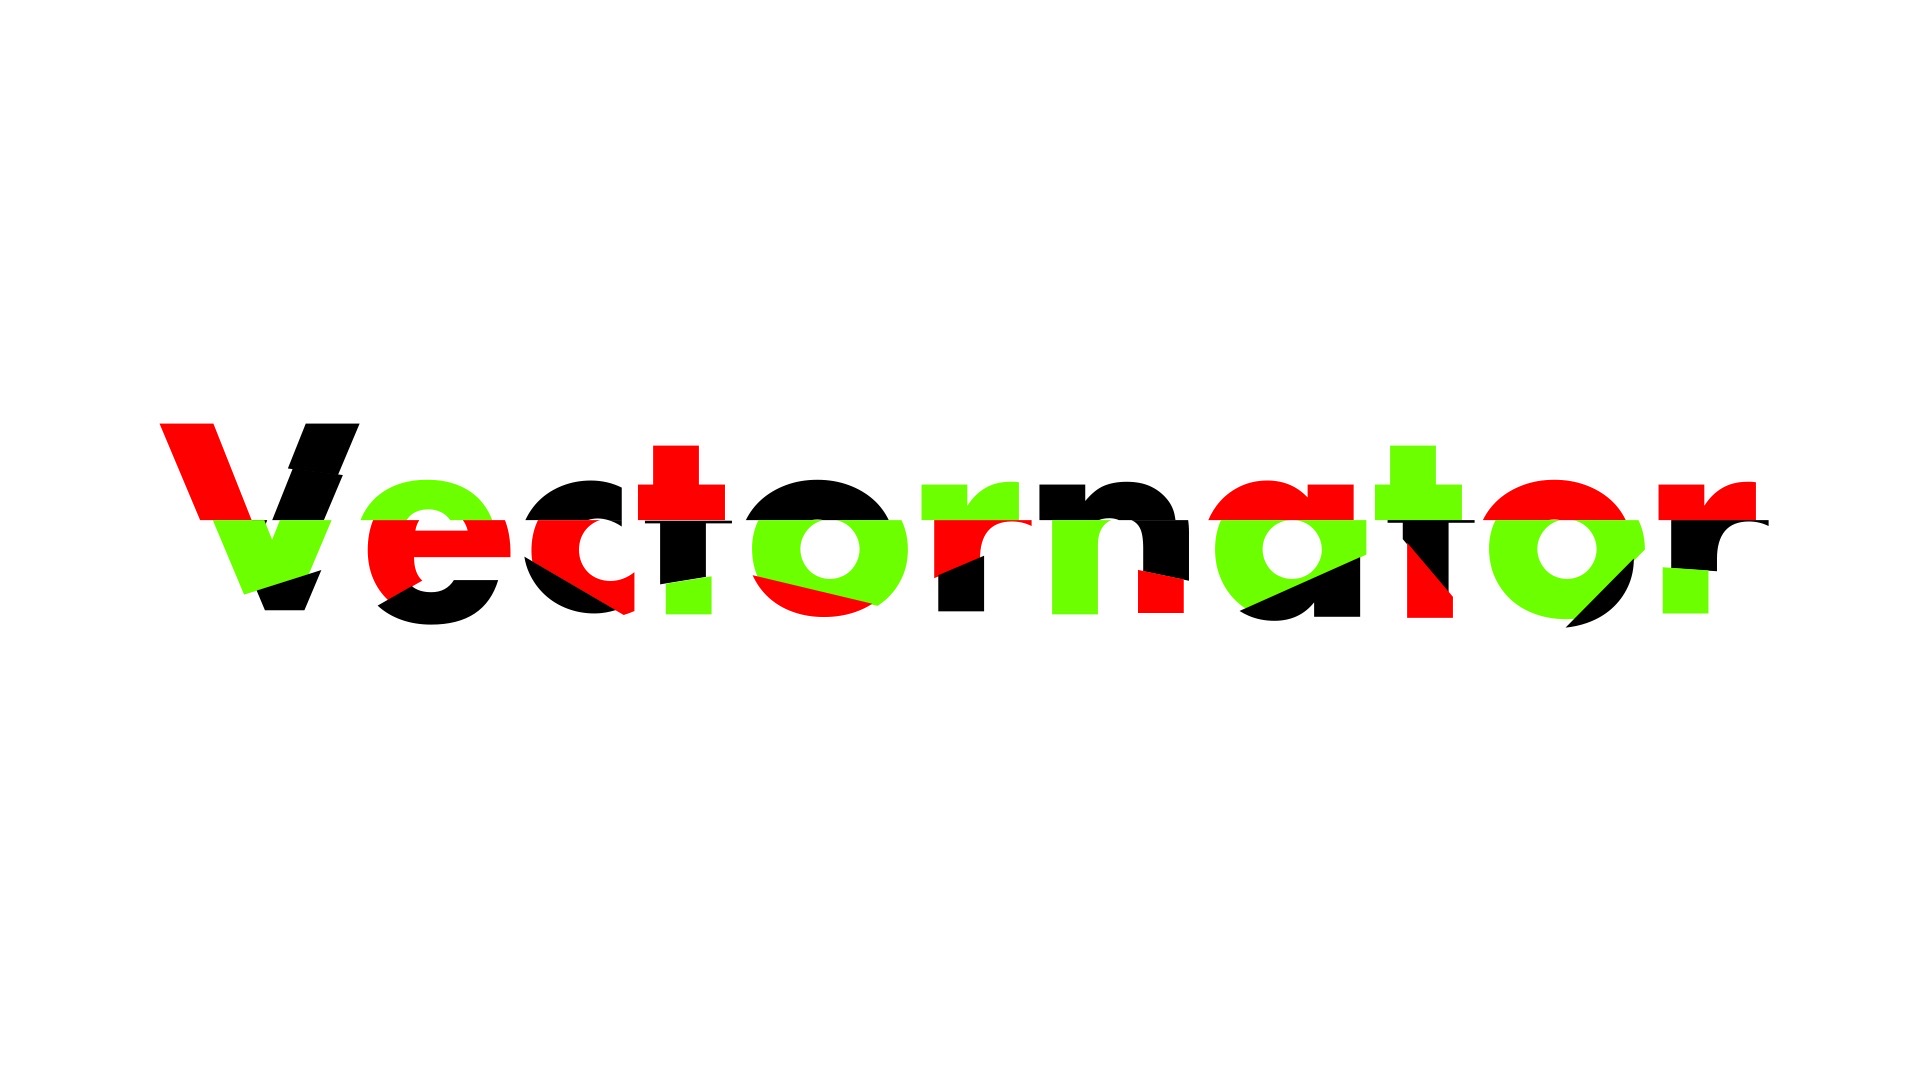 Vectornatorで分断・分割されたデザインの文字を描く方法